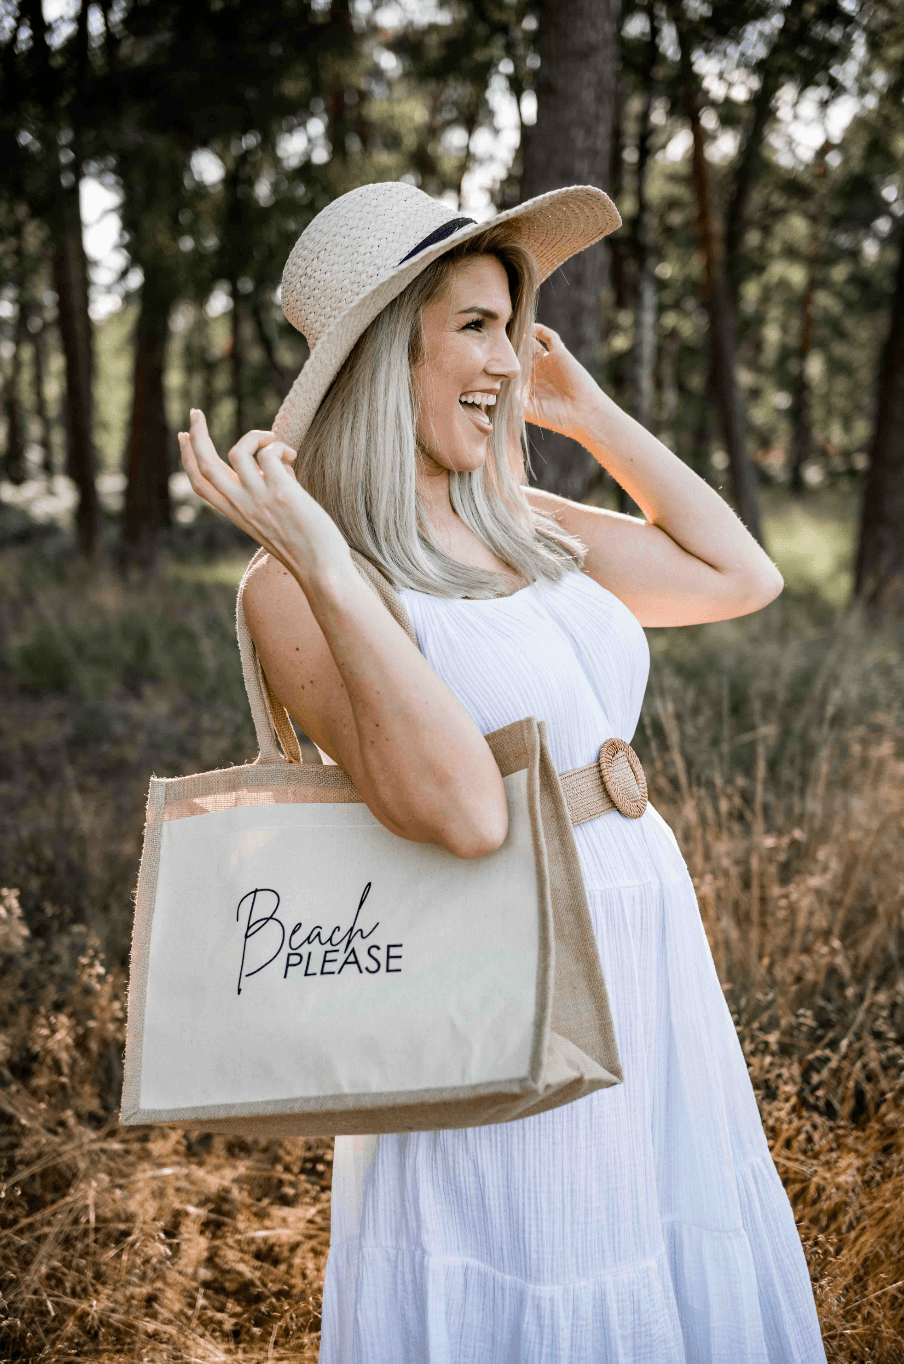 Jutetasche My other Bag – Evalyne